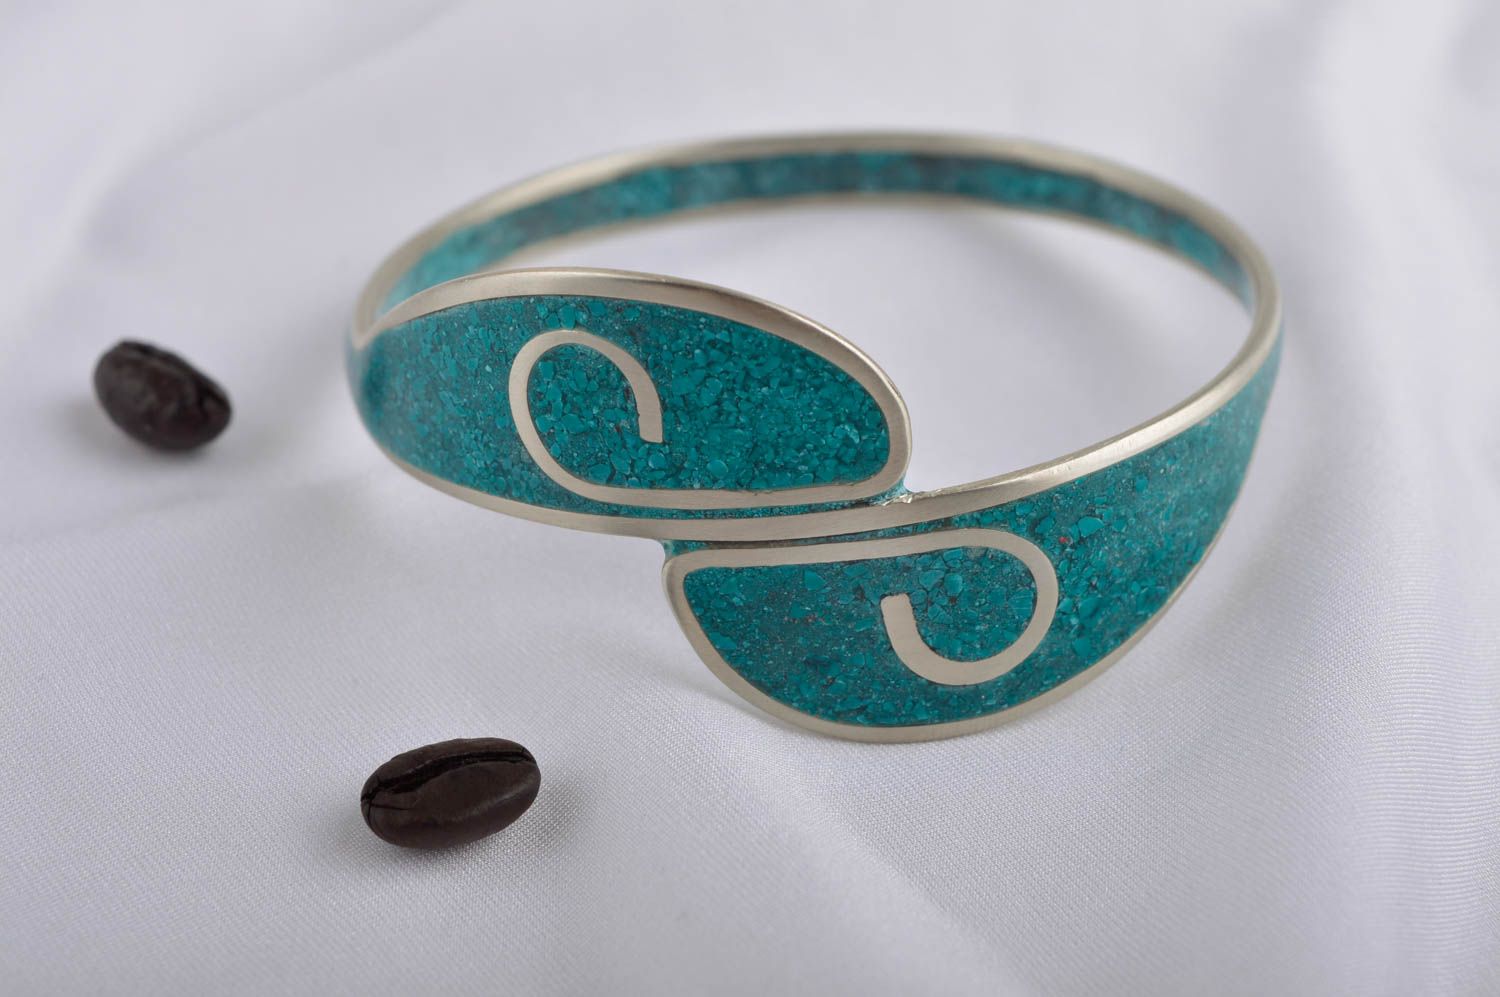 Handmade bracelet gemstone jewelry metal jewelry bracelets for women cool gifts photo 1